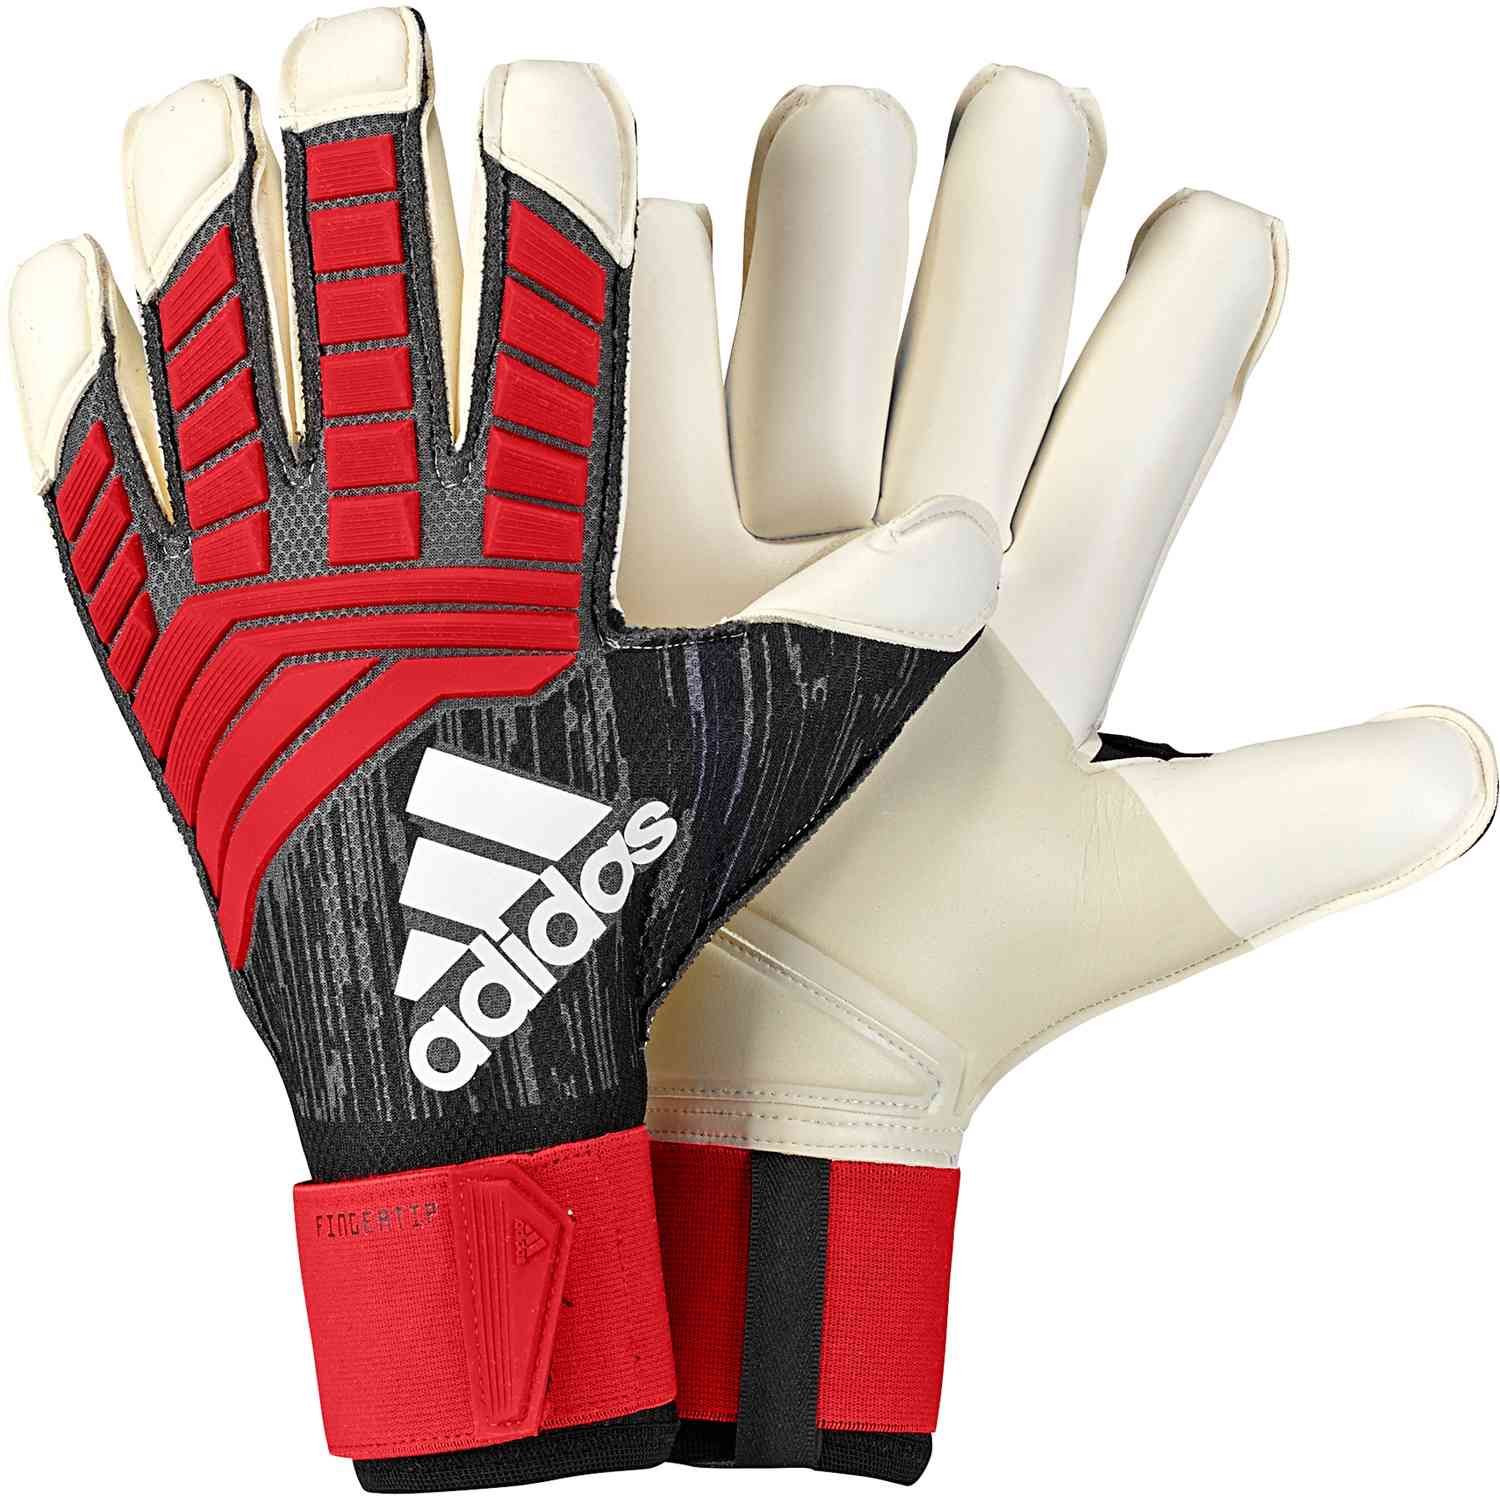 adidas fingertip goalkeeper gloves